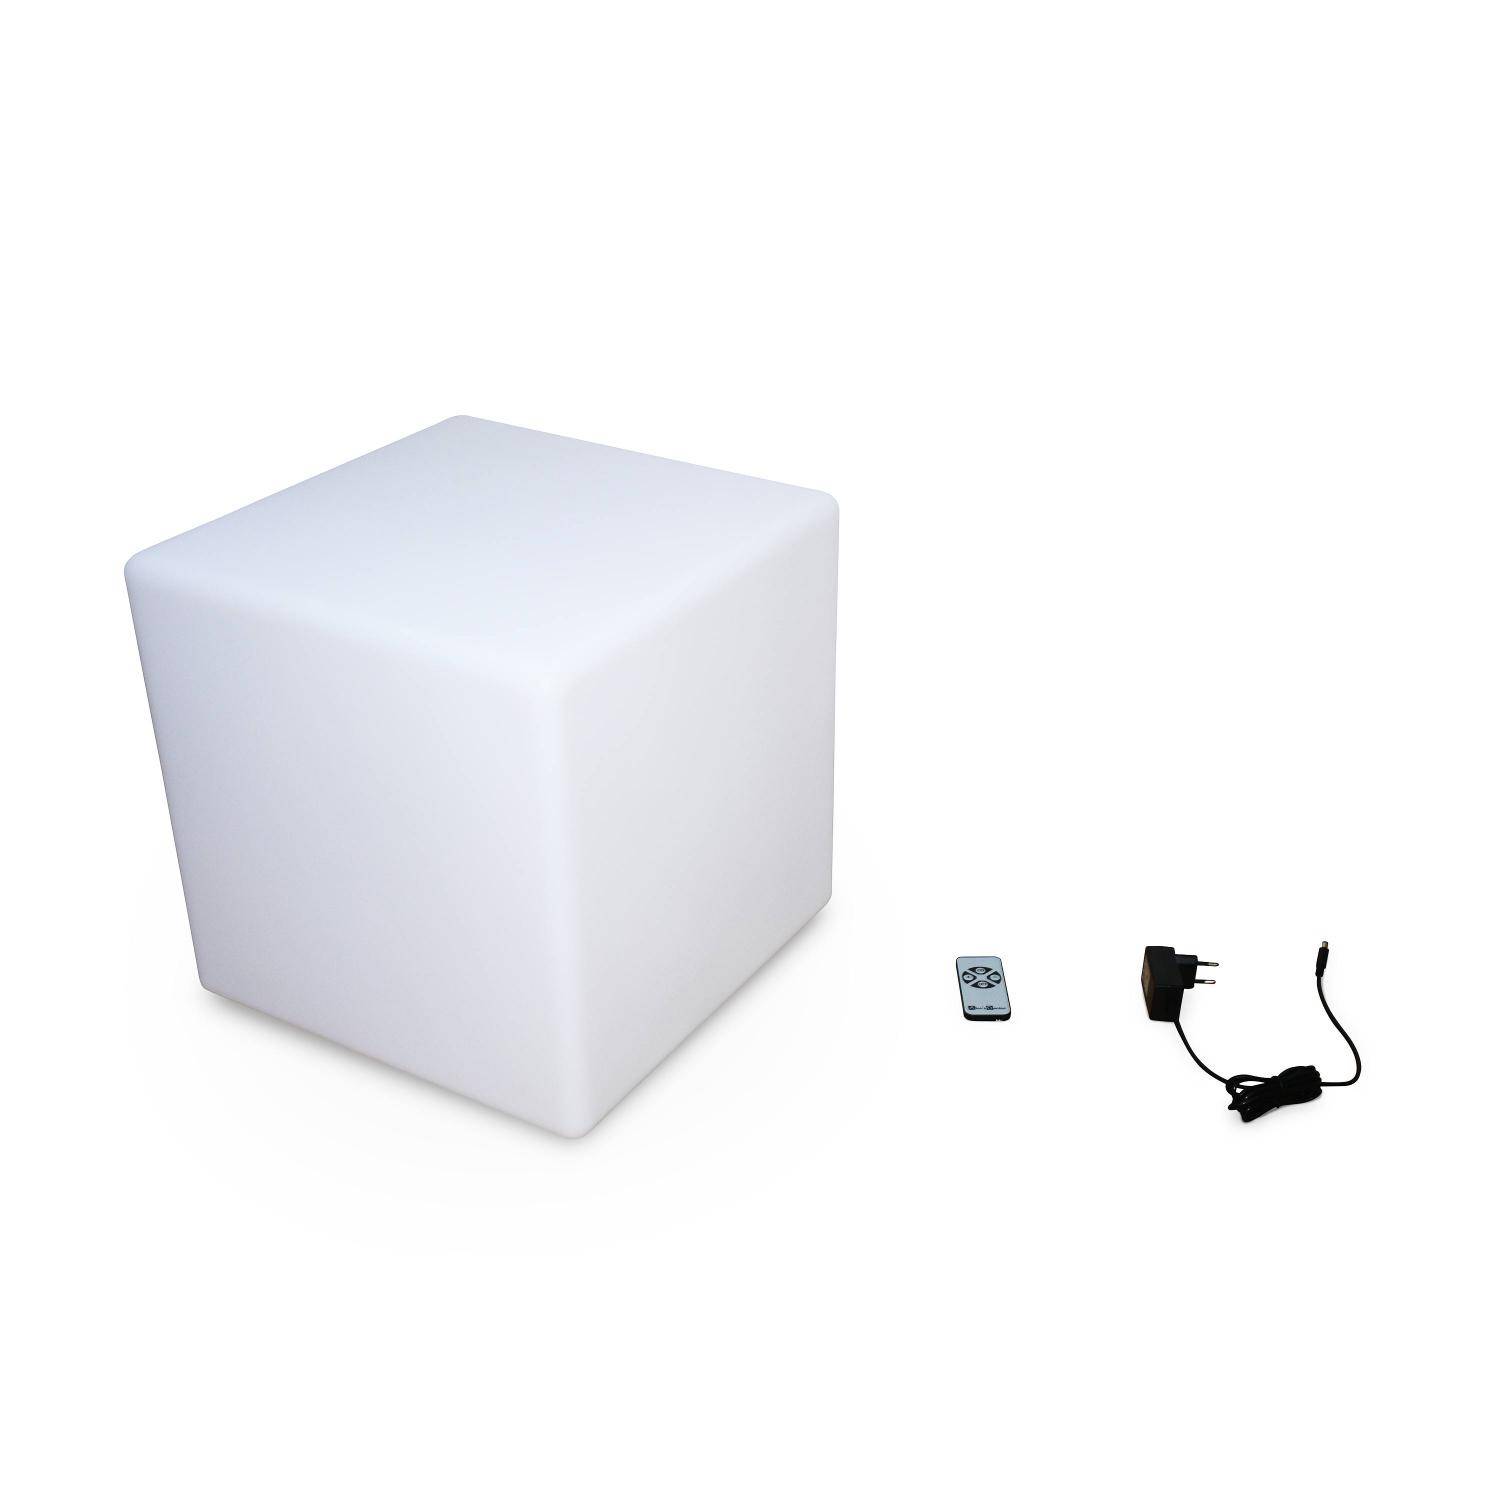 40cm spherical LED lamp – Decorative light cube, warm white, remote control Photo3